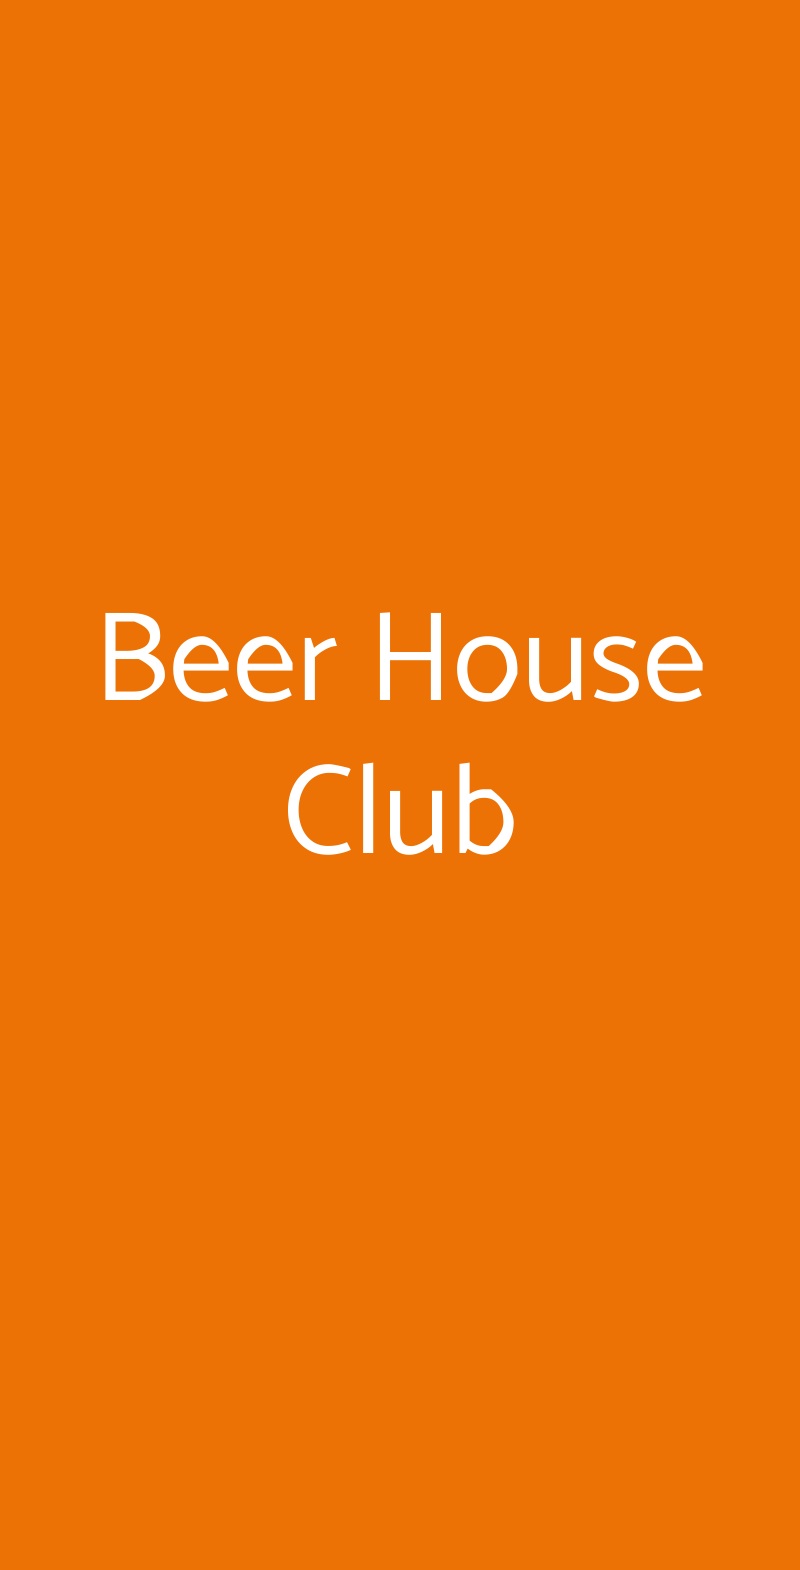 Beer House Club Firenze menù 1 pagina